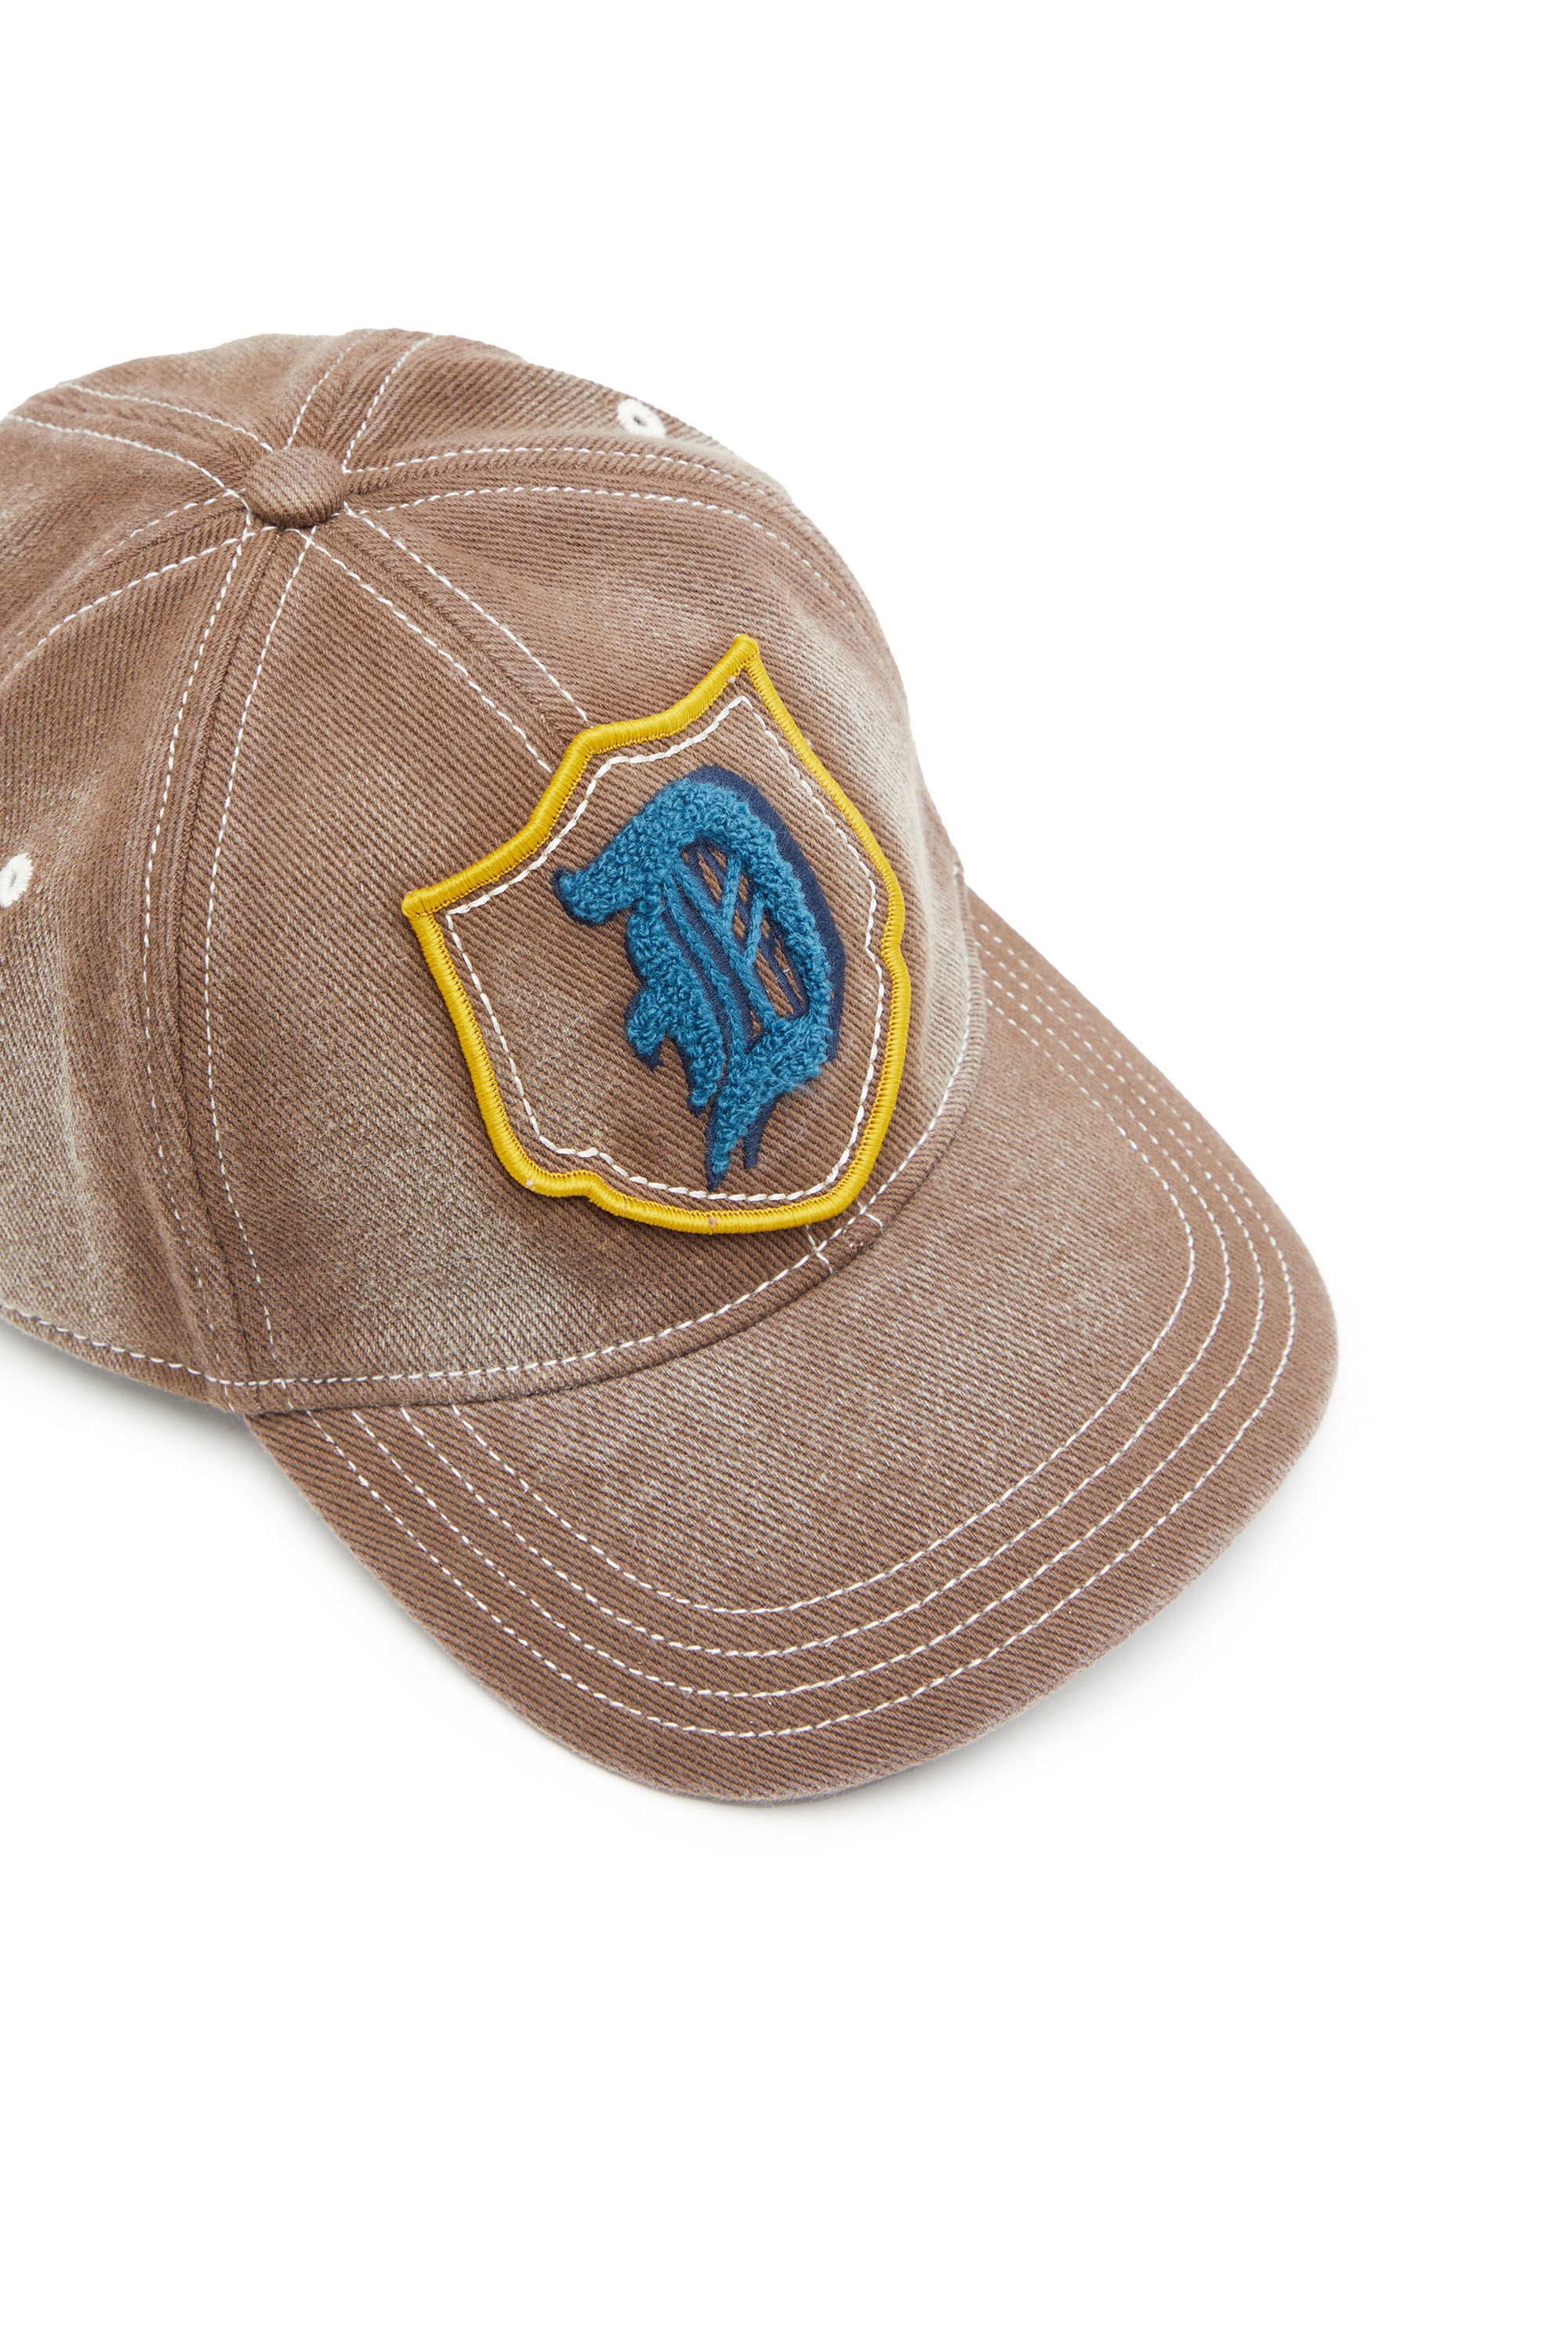 Men's Baseball cap with Terry patch | C-VARS Diesel